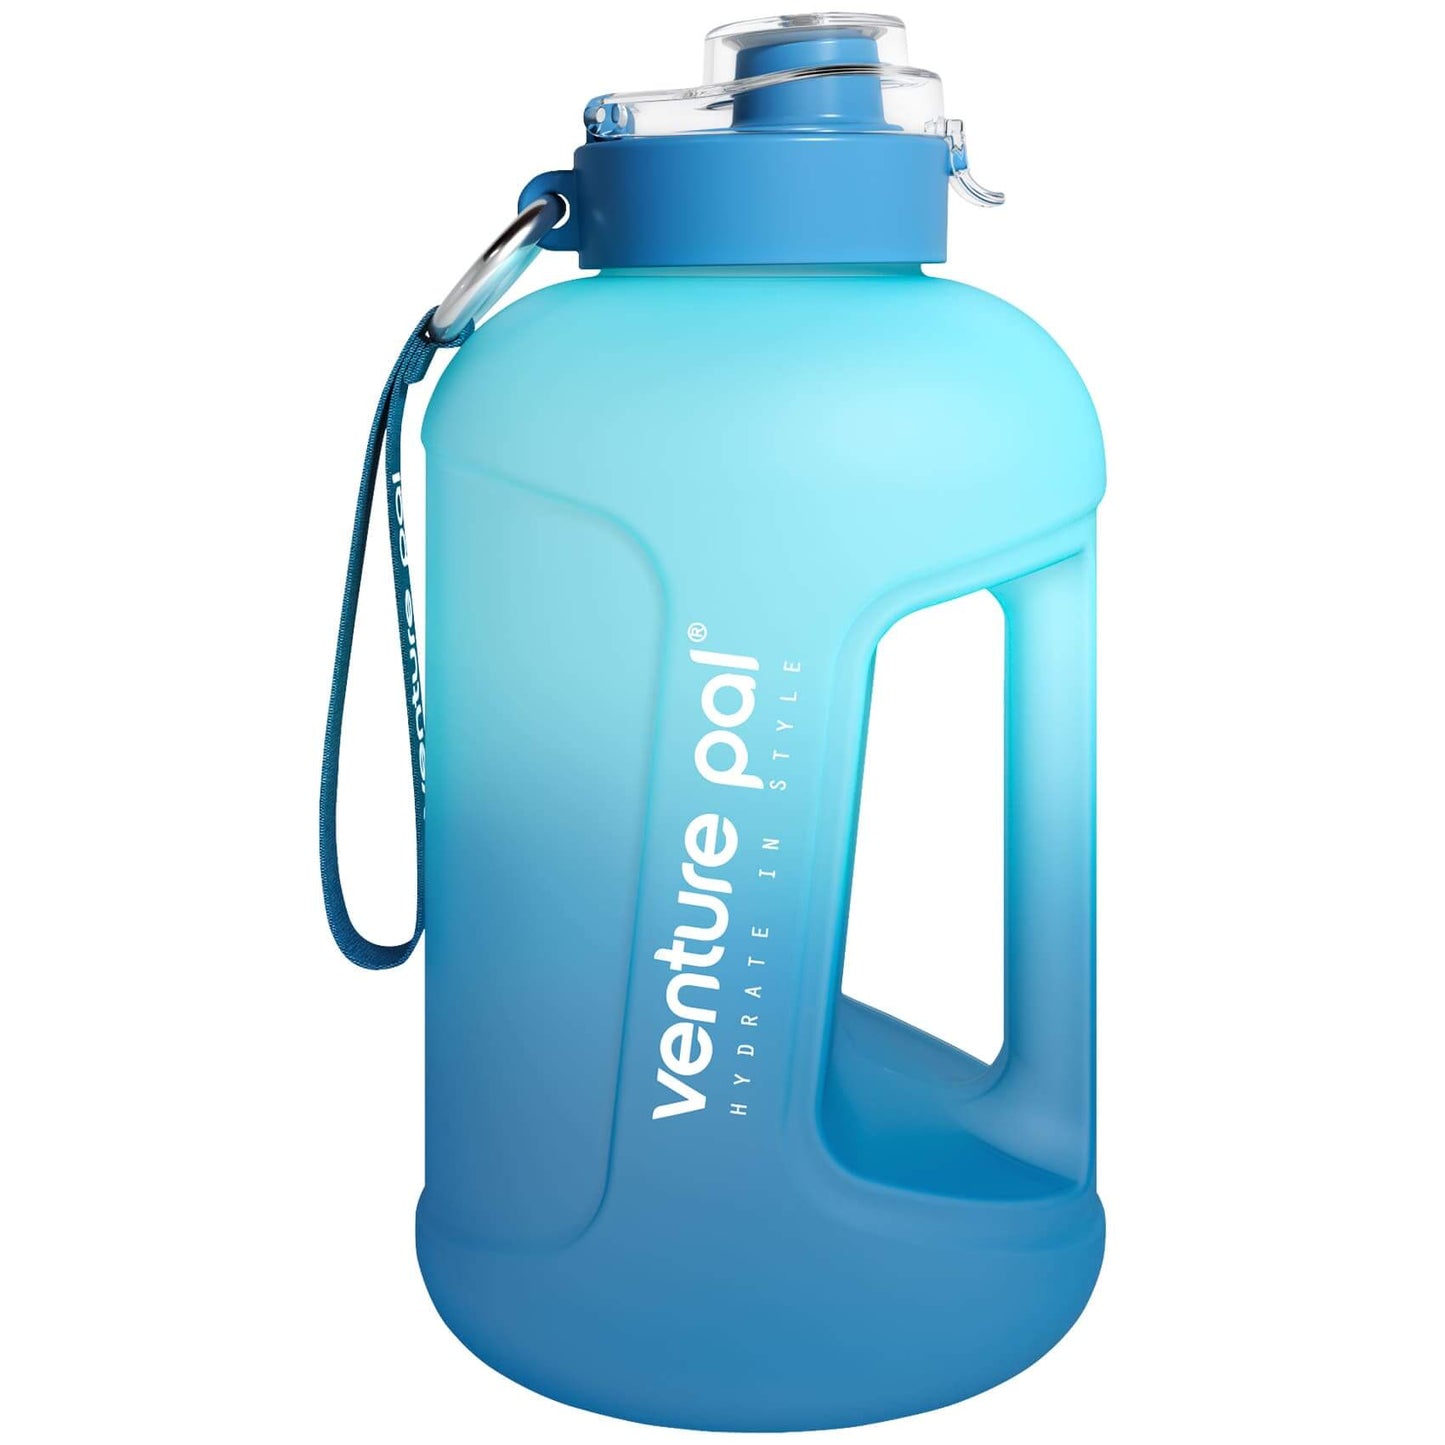 Tracy McGrady's Venture Pal 74oz Motivational Water Bottle